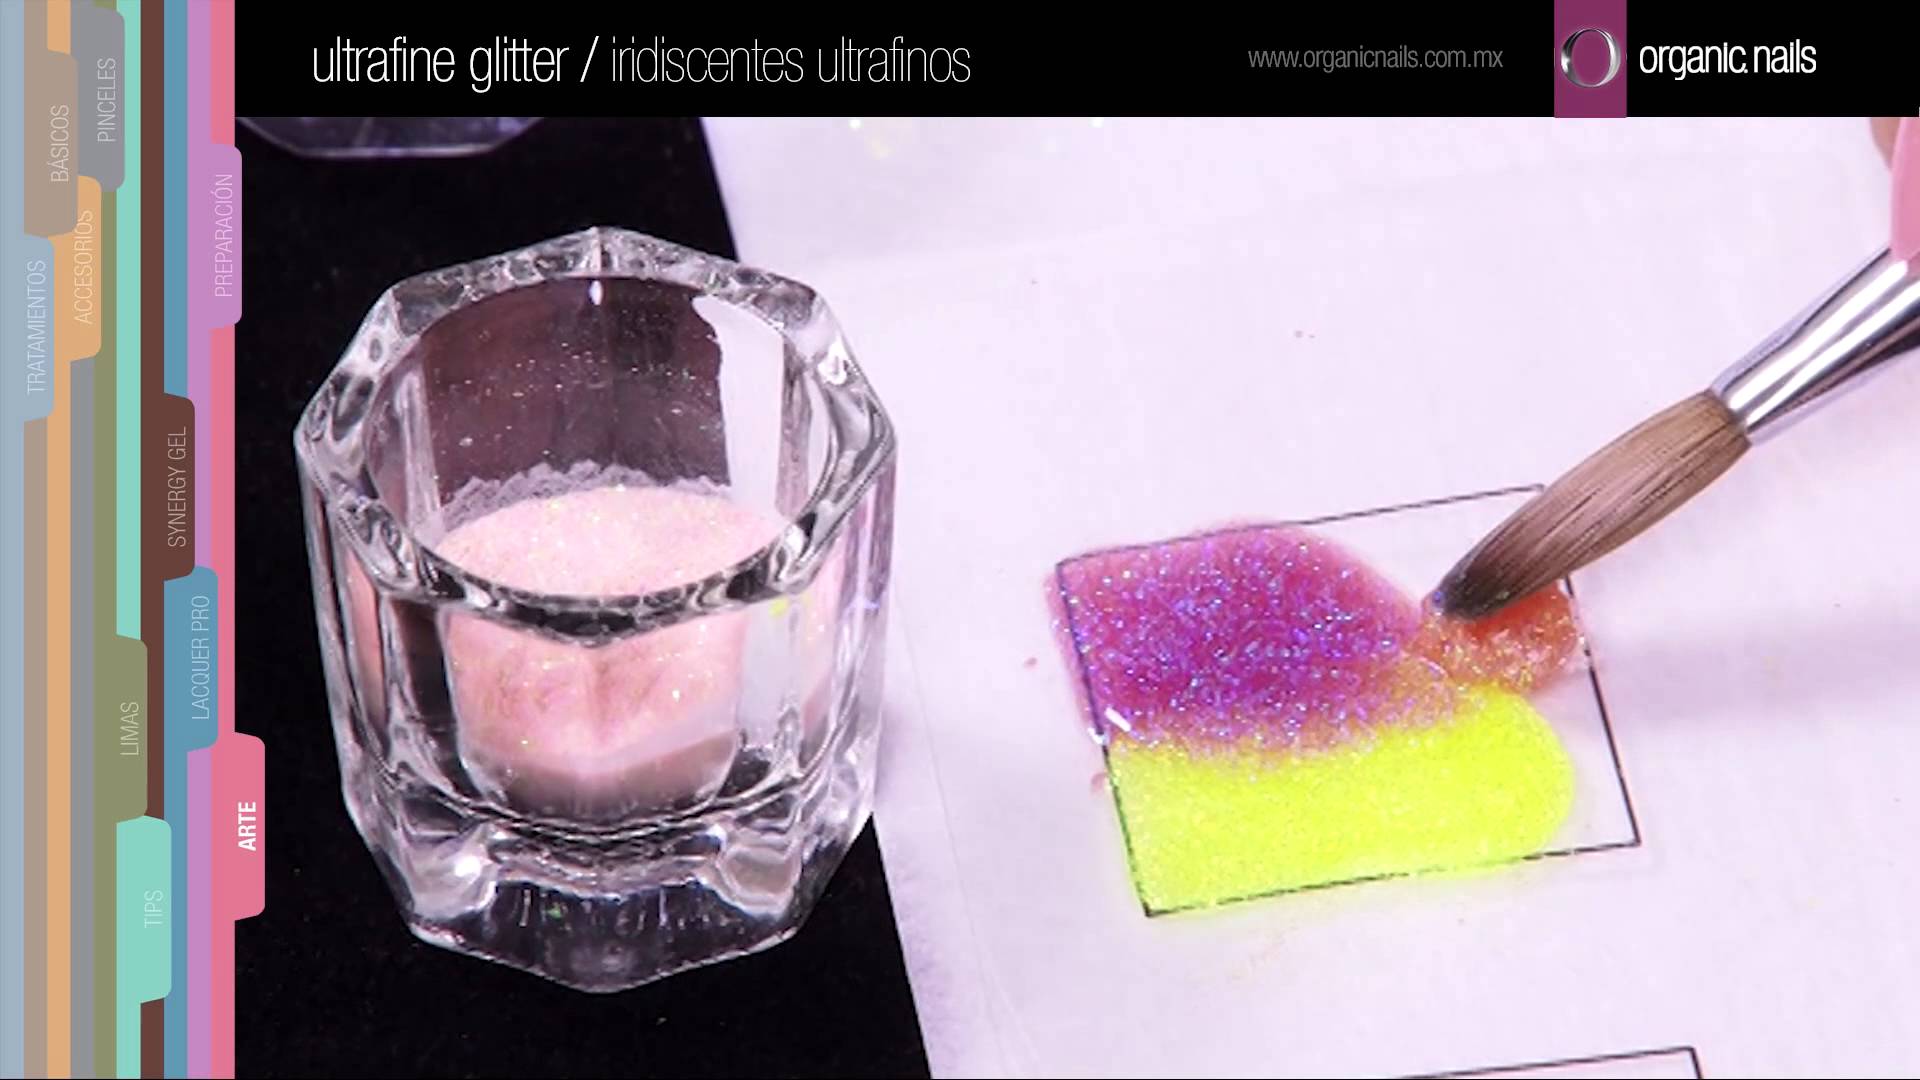 Ultrafine Glitters / Iridiscentes Organic Nails - YouTube